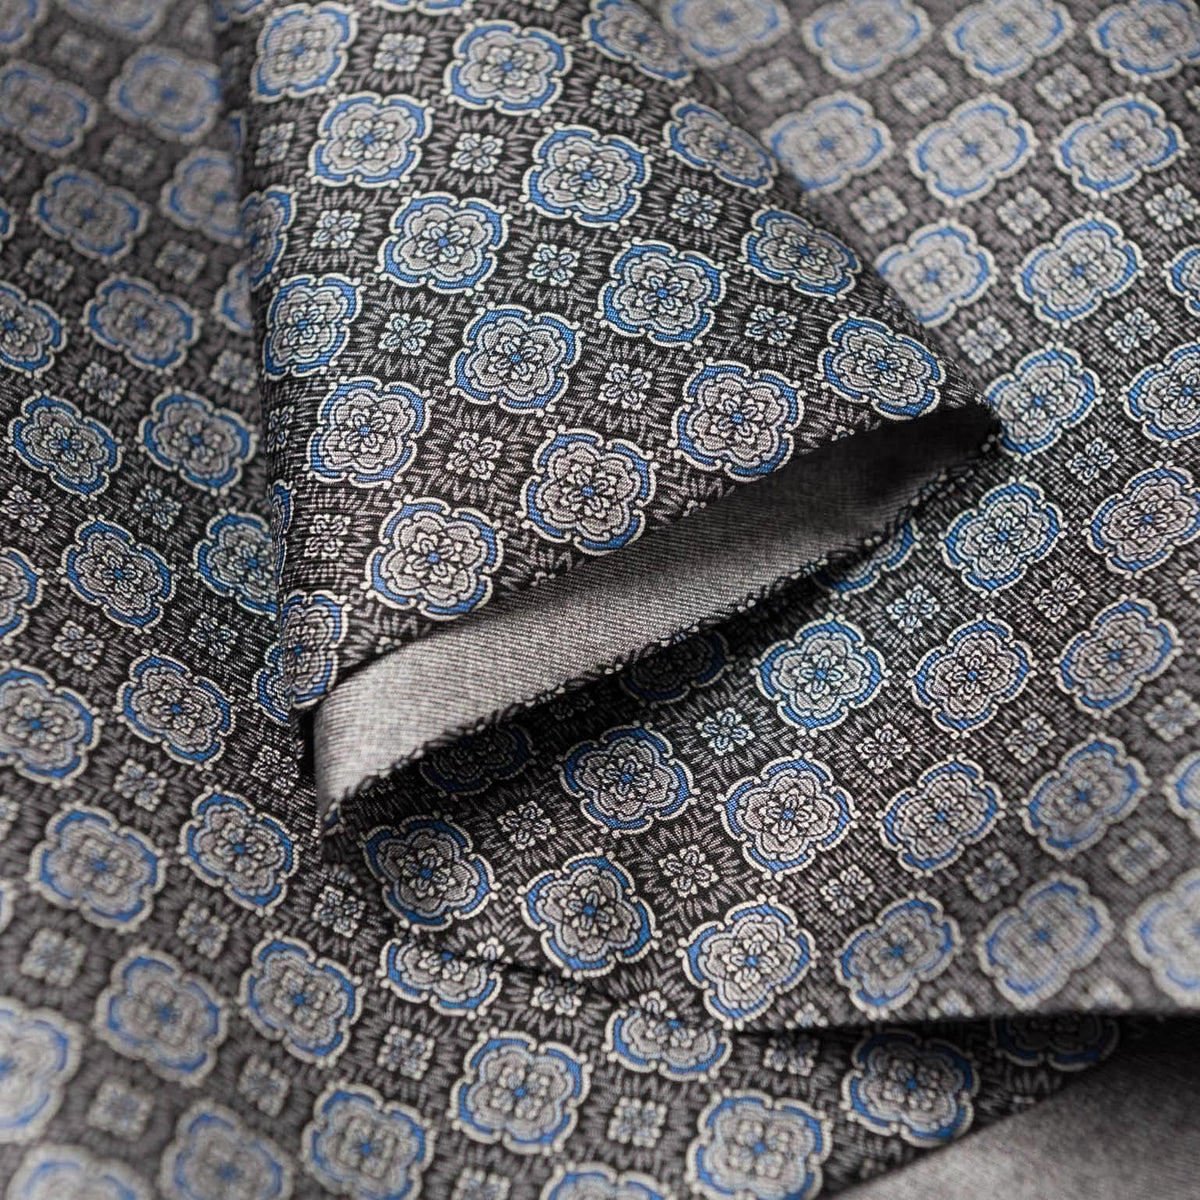 Luxury grey silk dress scarf made in Italy